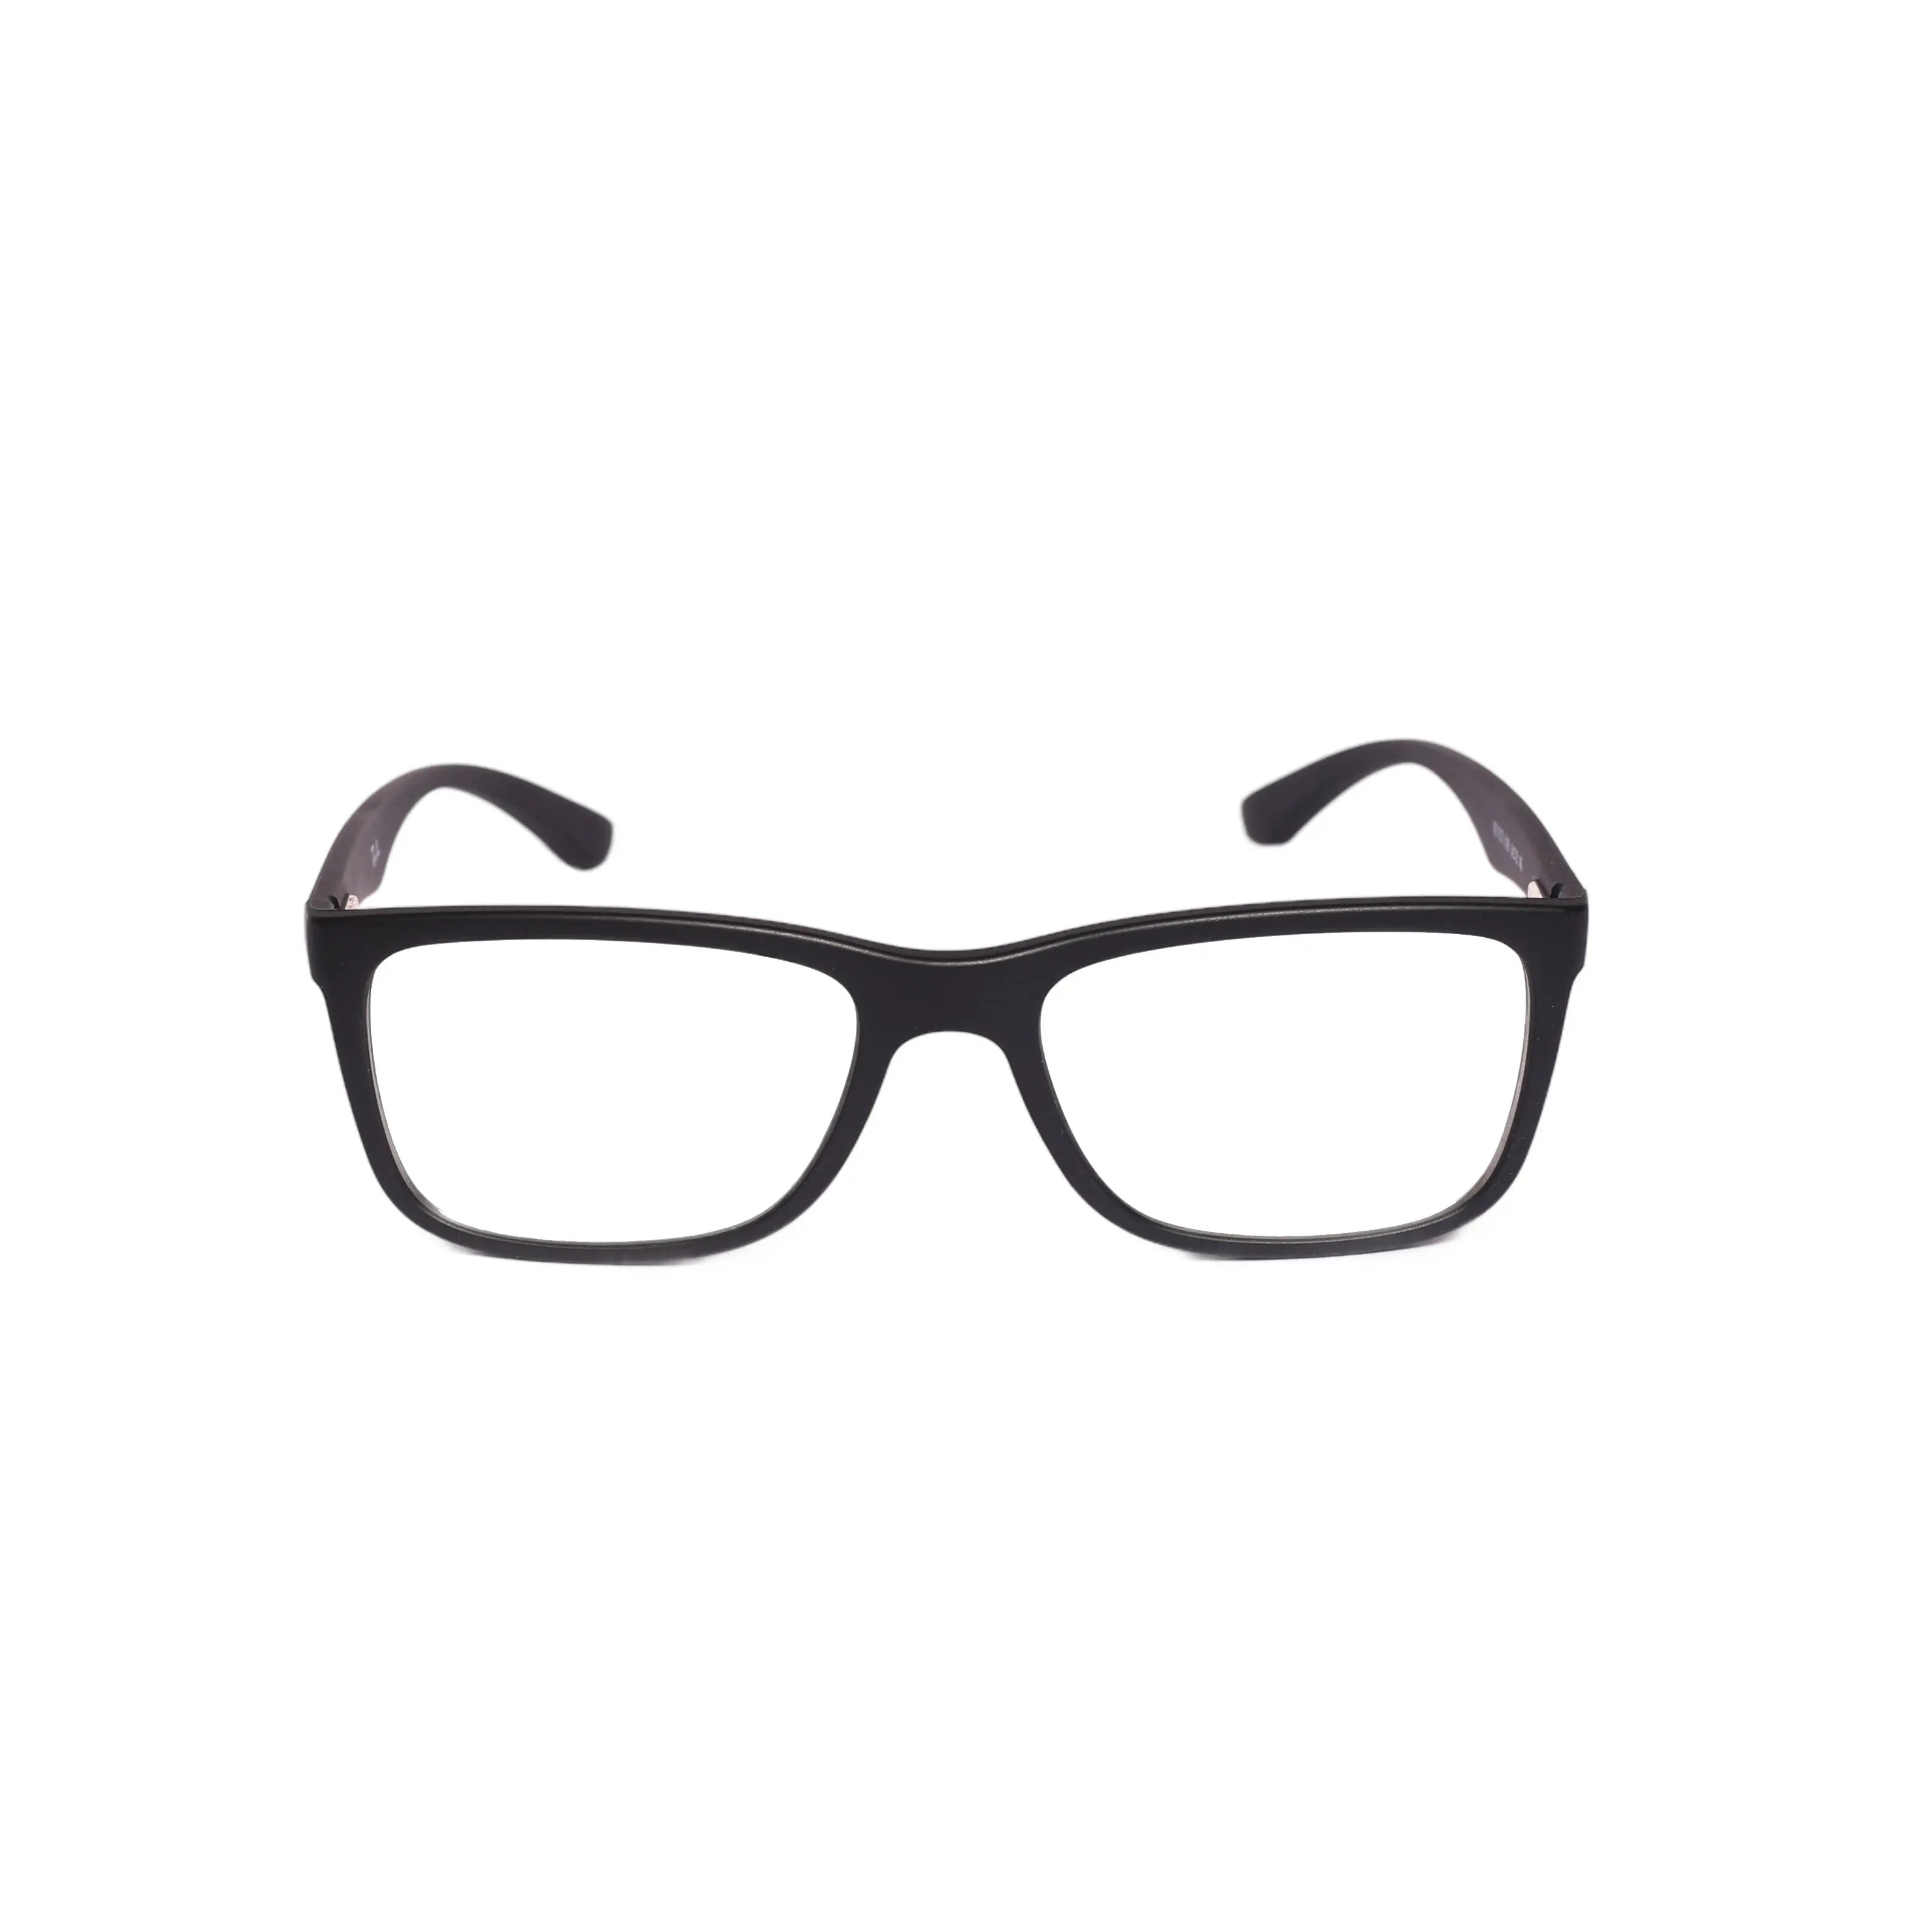 Rayban-RX7027I-54-5196 Eyeglasses - Premium Eyeglasses from Rayban - Just Rs. 5190! Shop now at Laxmi Opticians